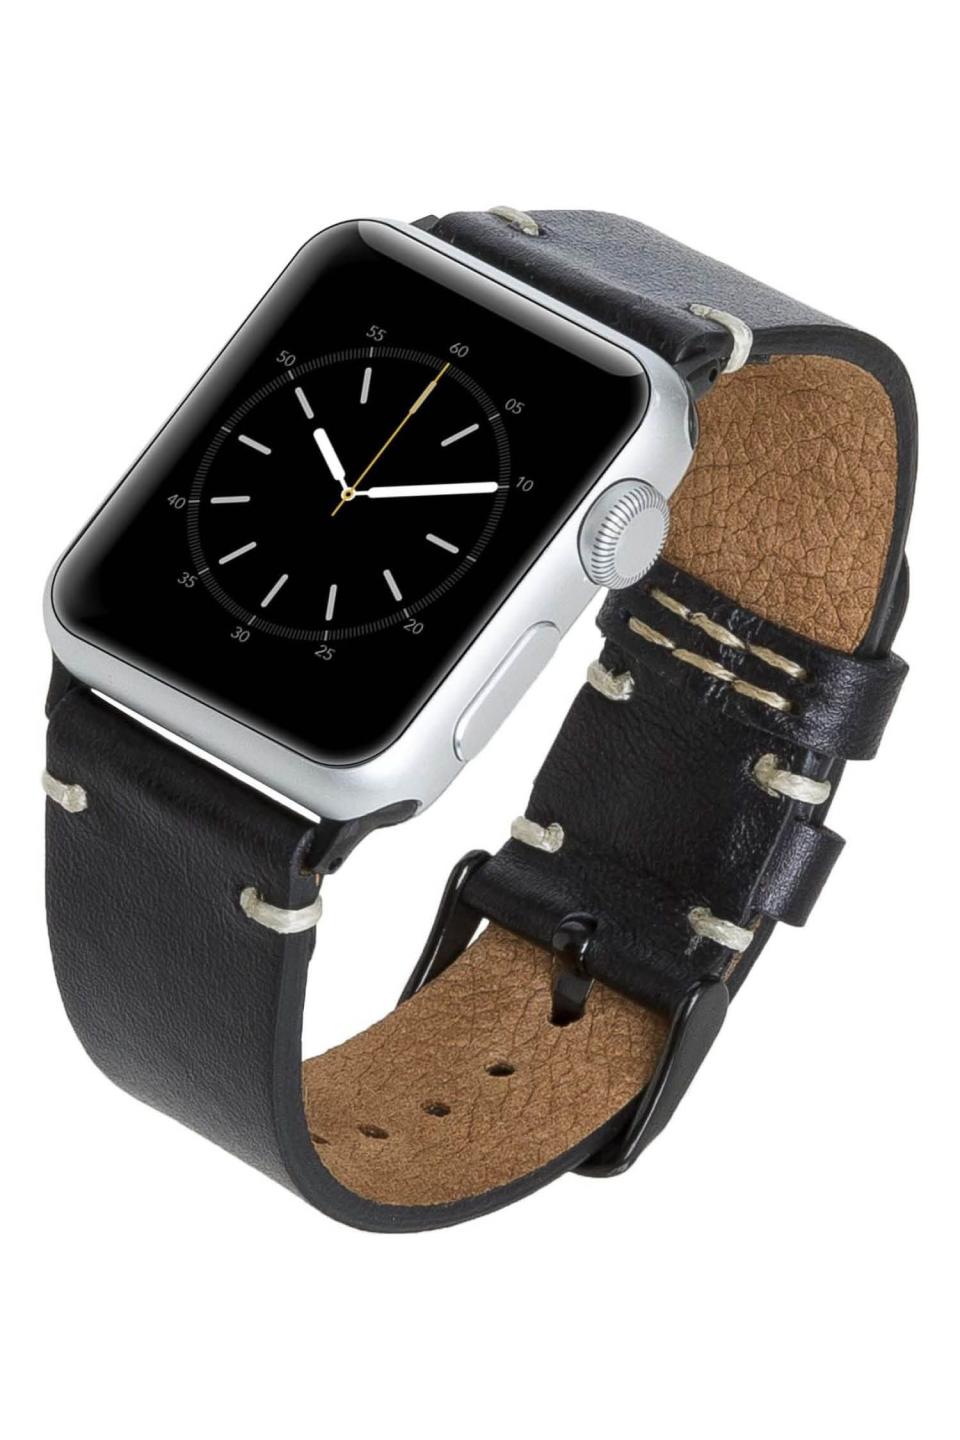 9) Venito Apple Watch Band